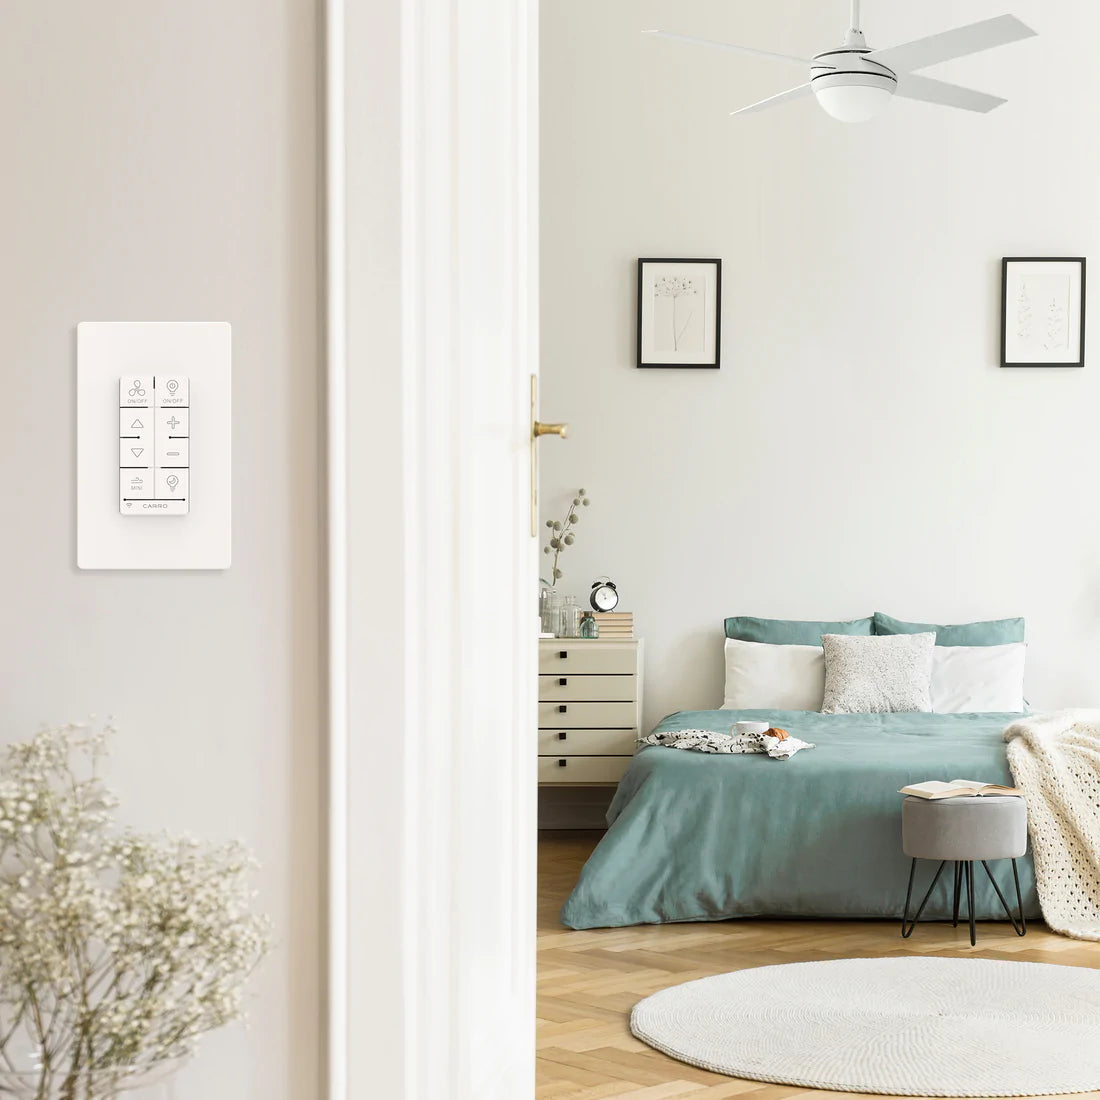 convert your AC ceiling fan into smart fan with smart switch